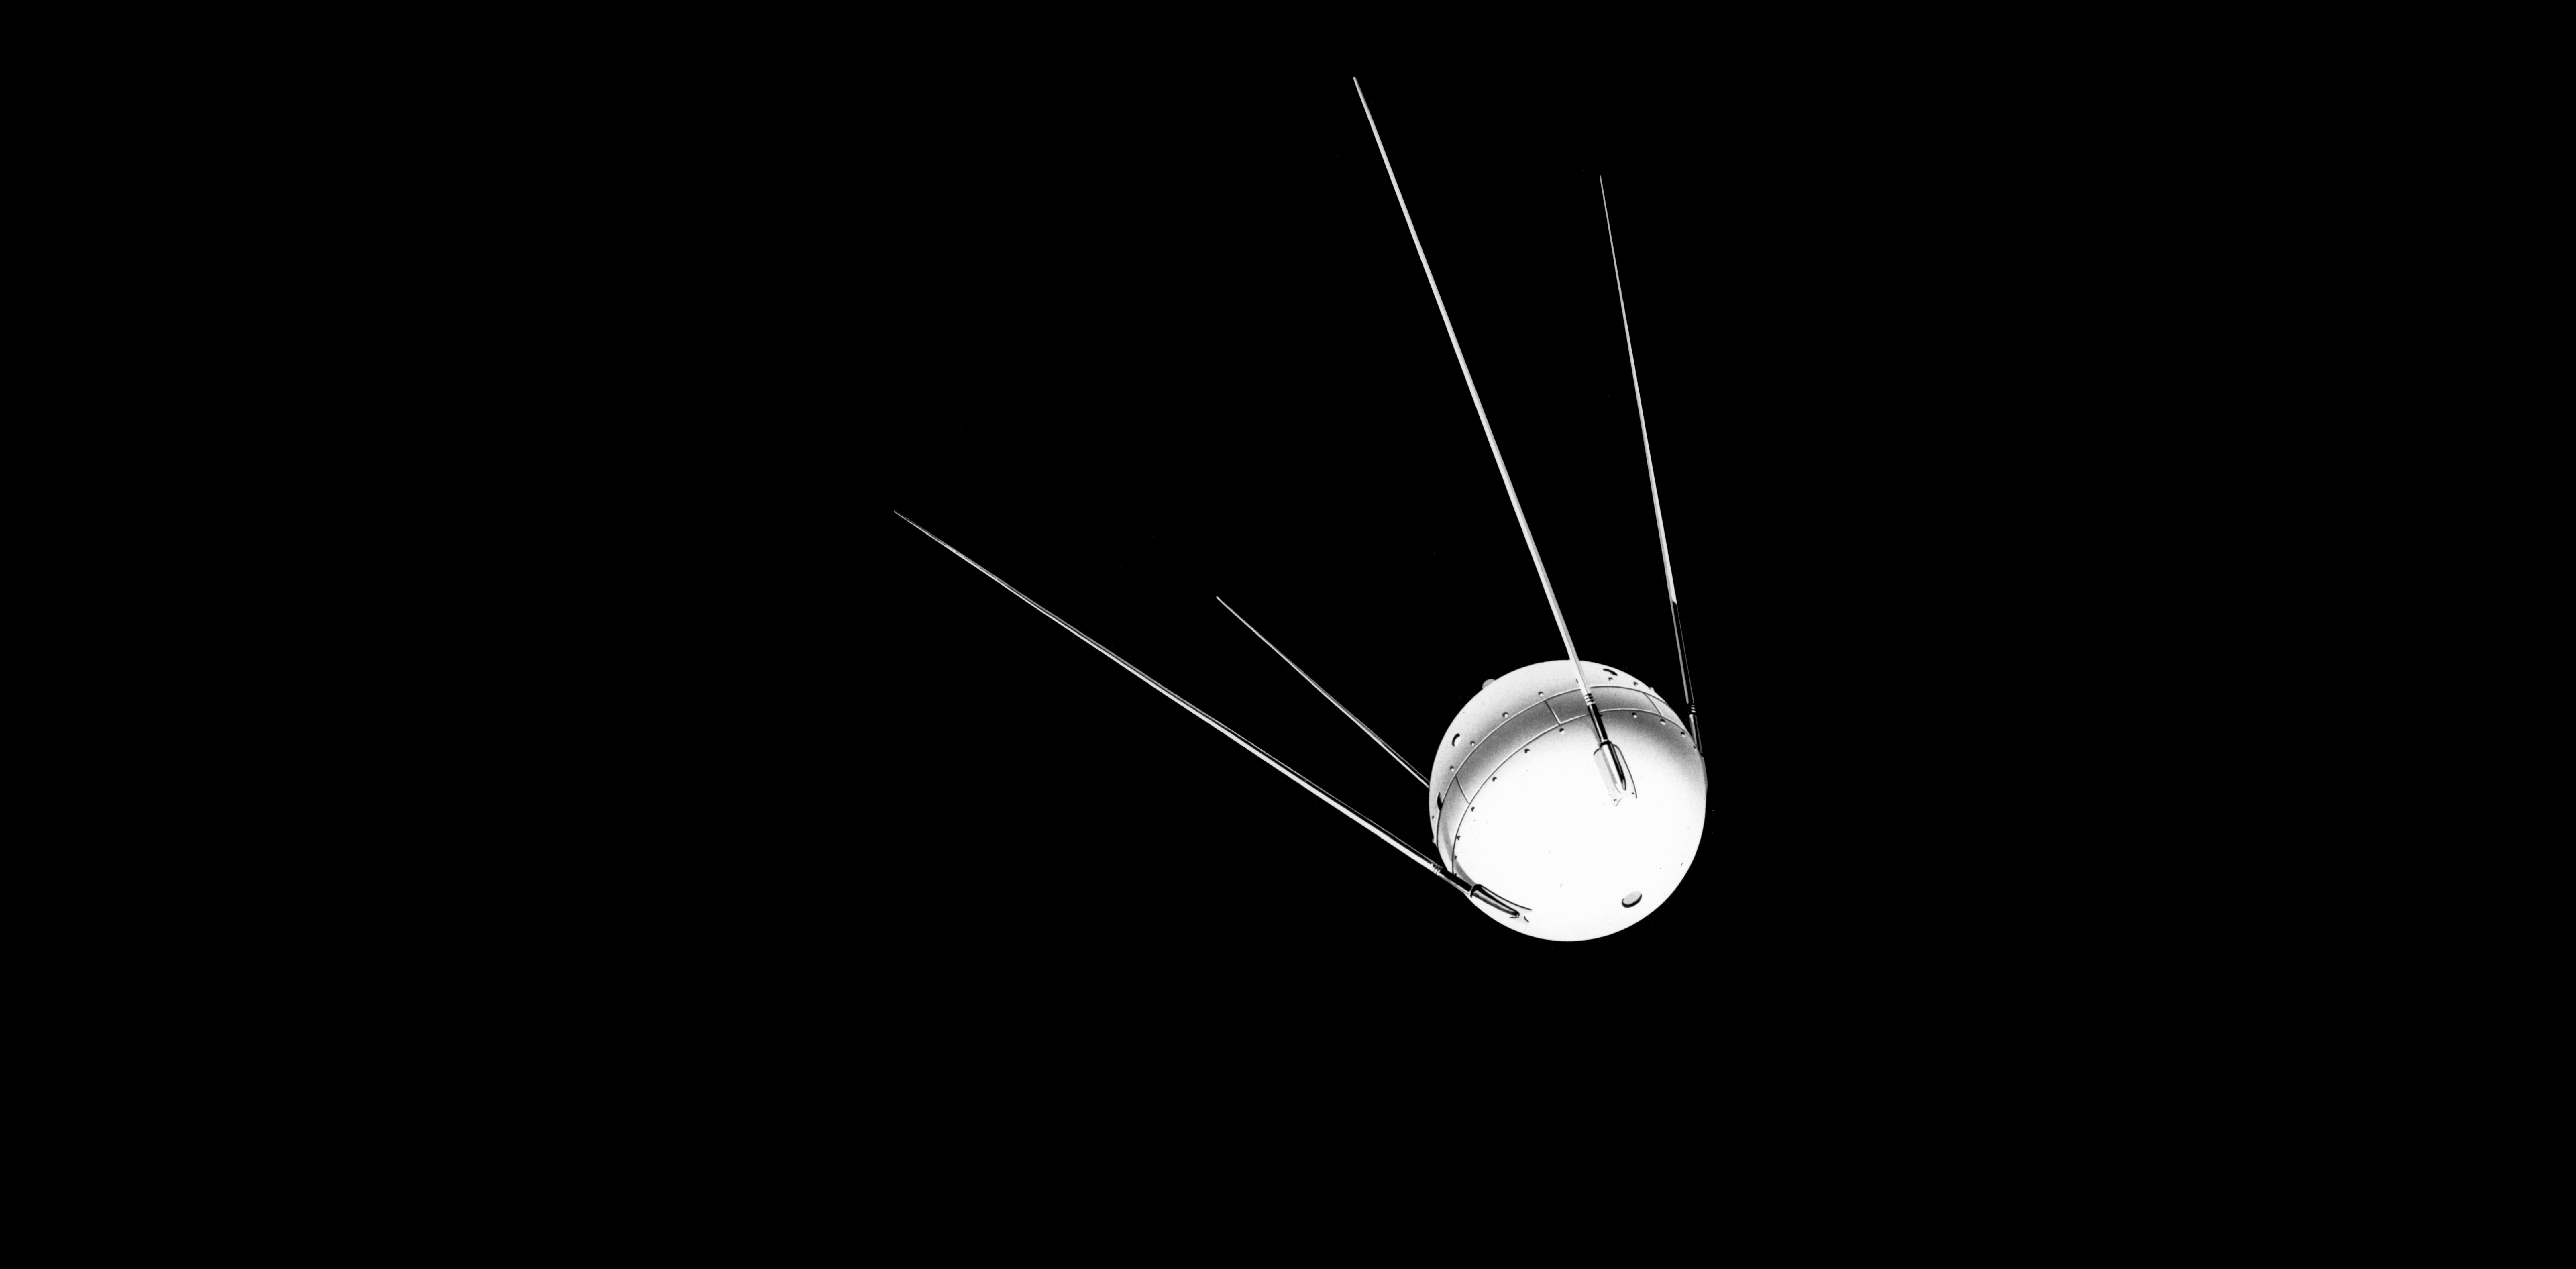 1957: Sputnik and the Space Race